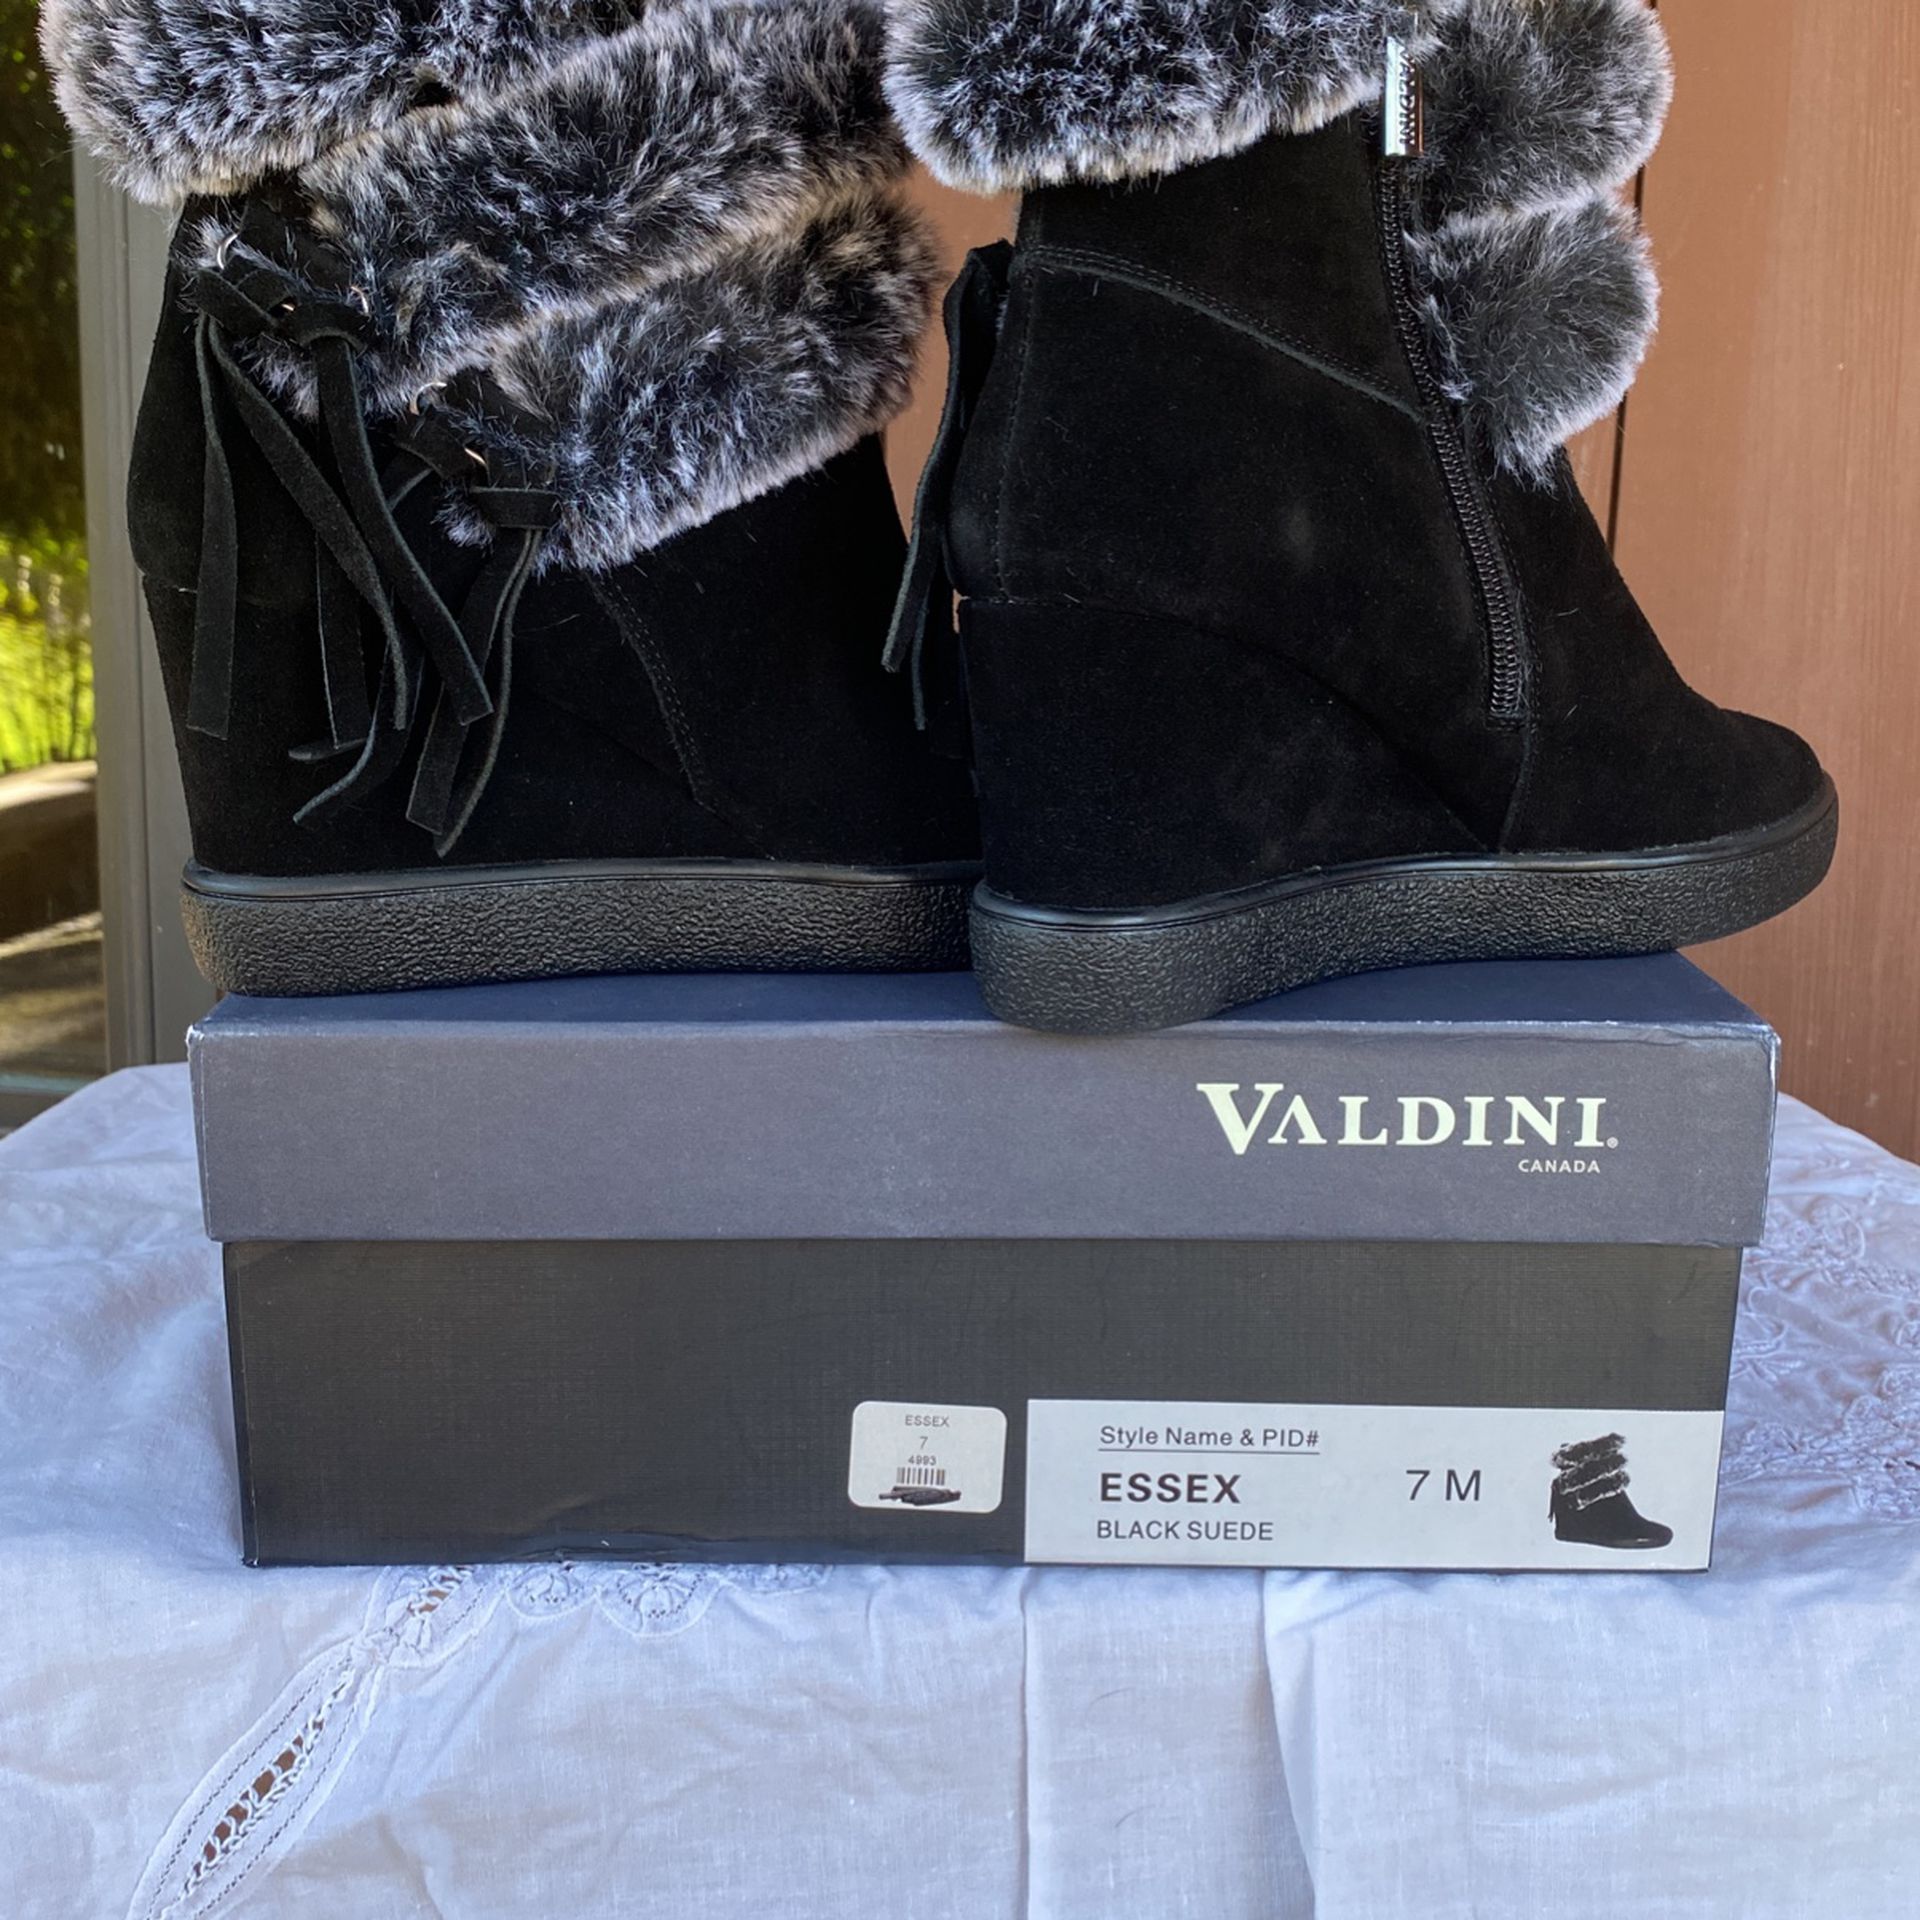 Valdini Canada Faux Fur / Black Suede Boot